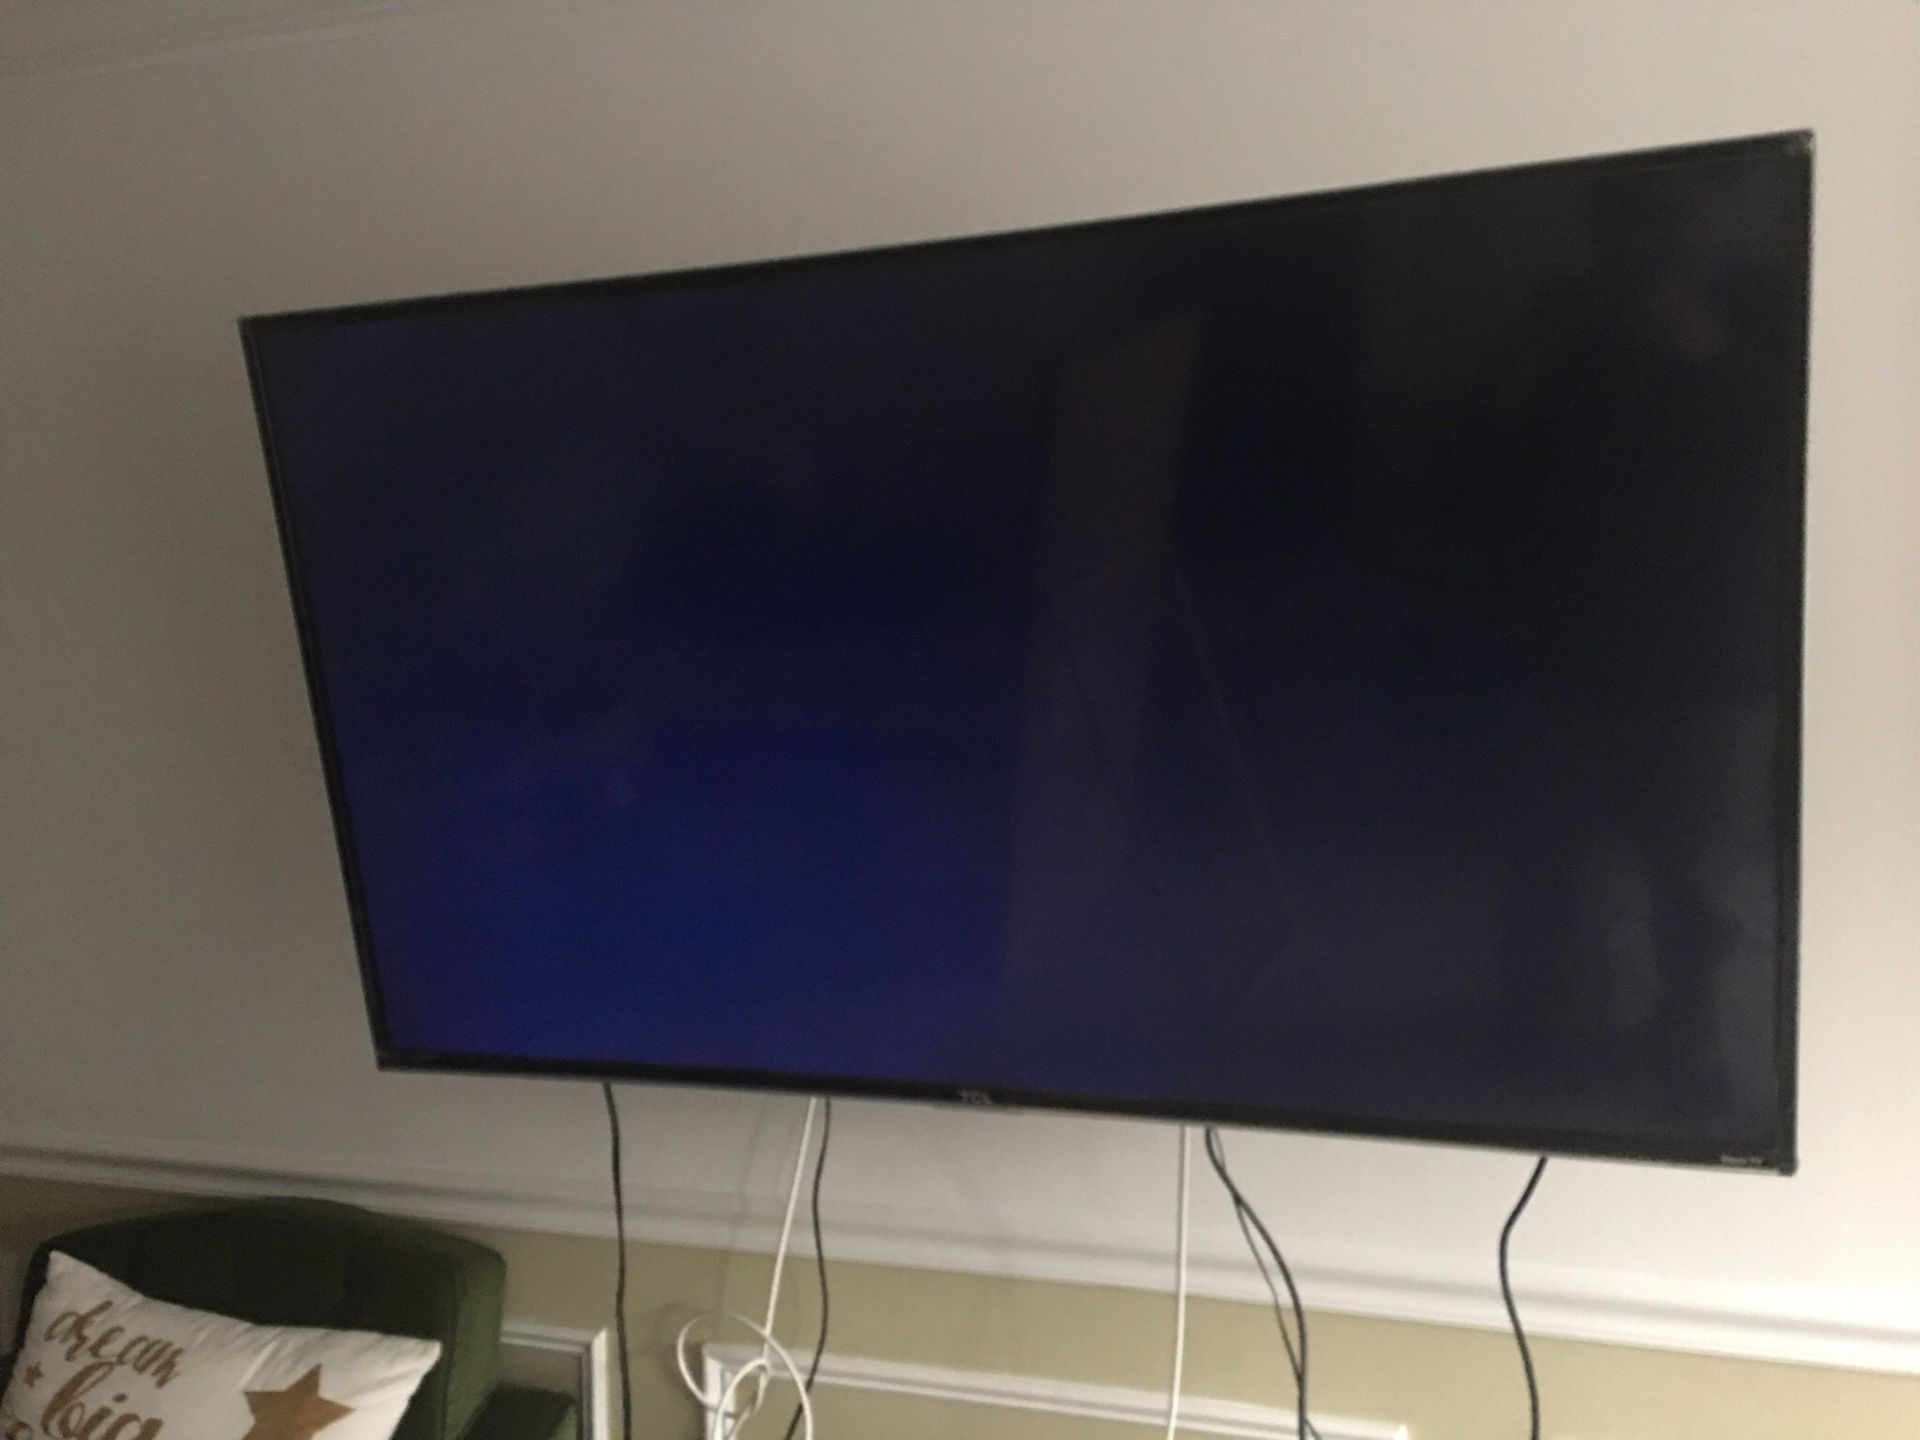 49-inch TCL Roku LED TV